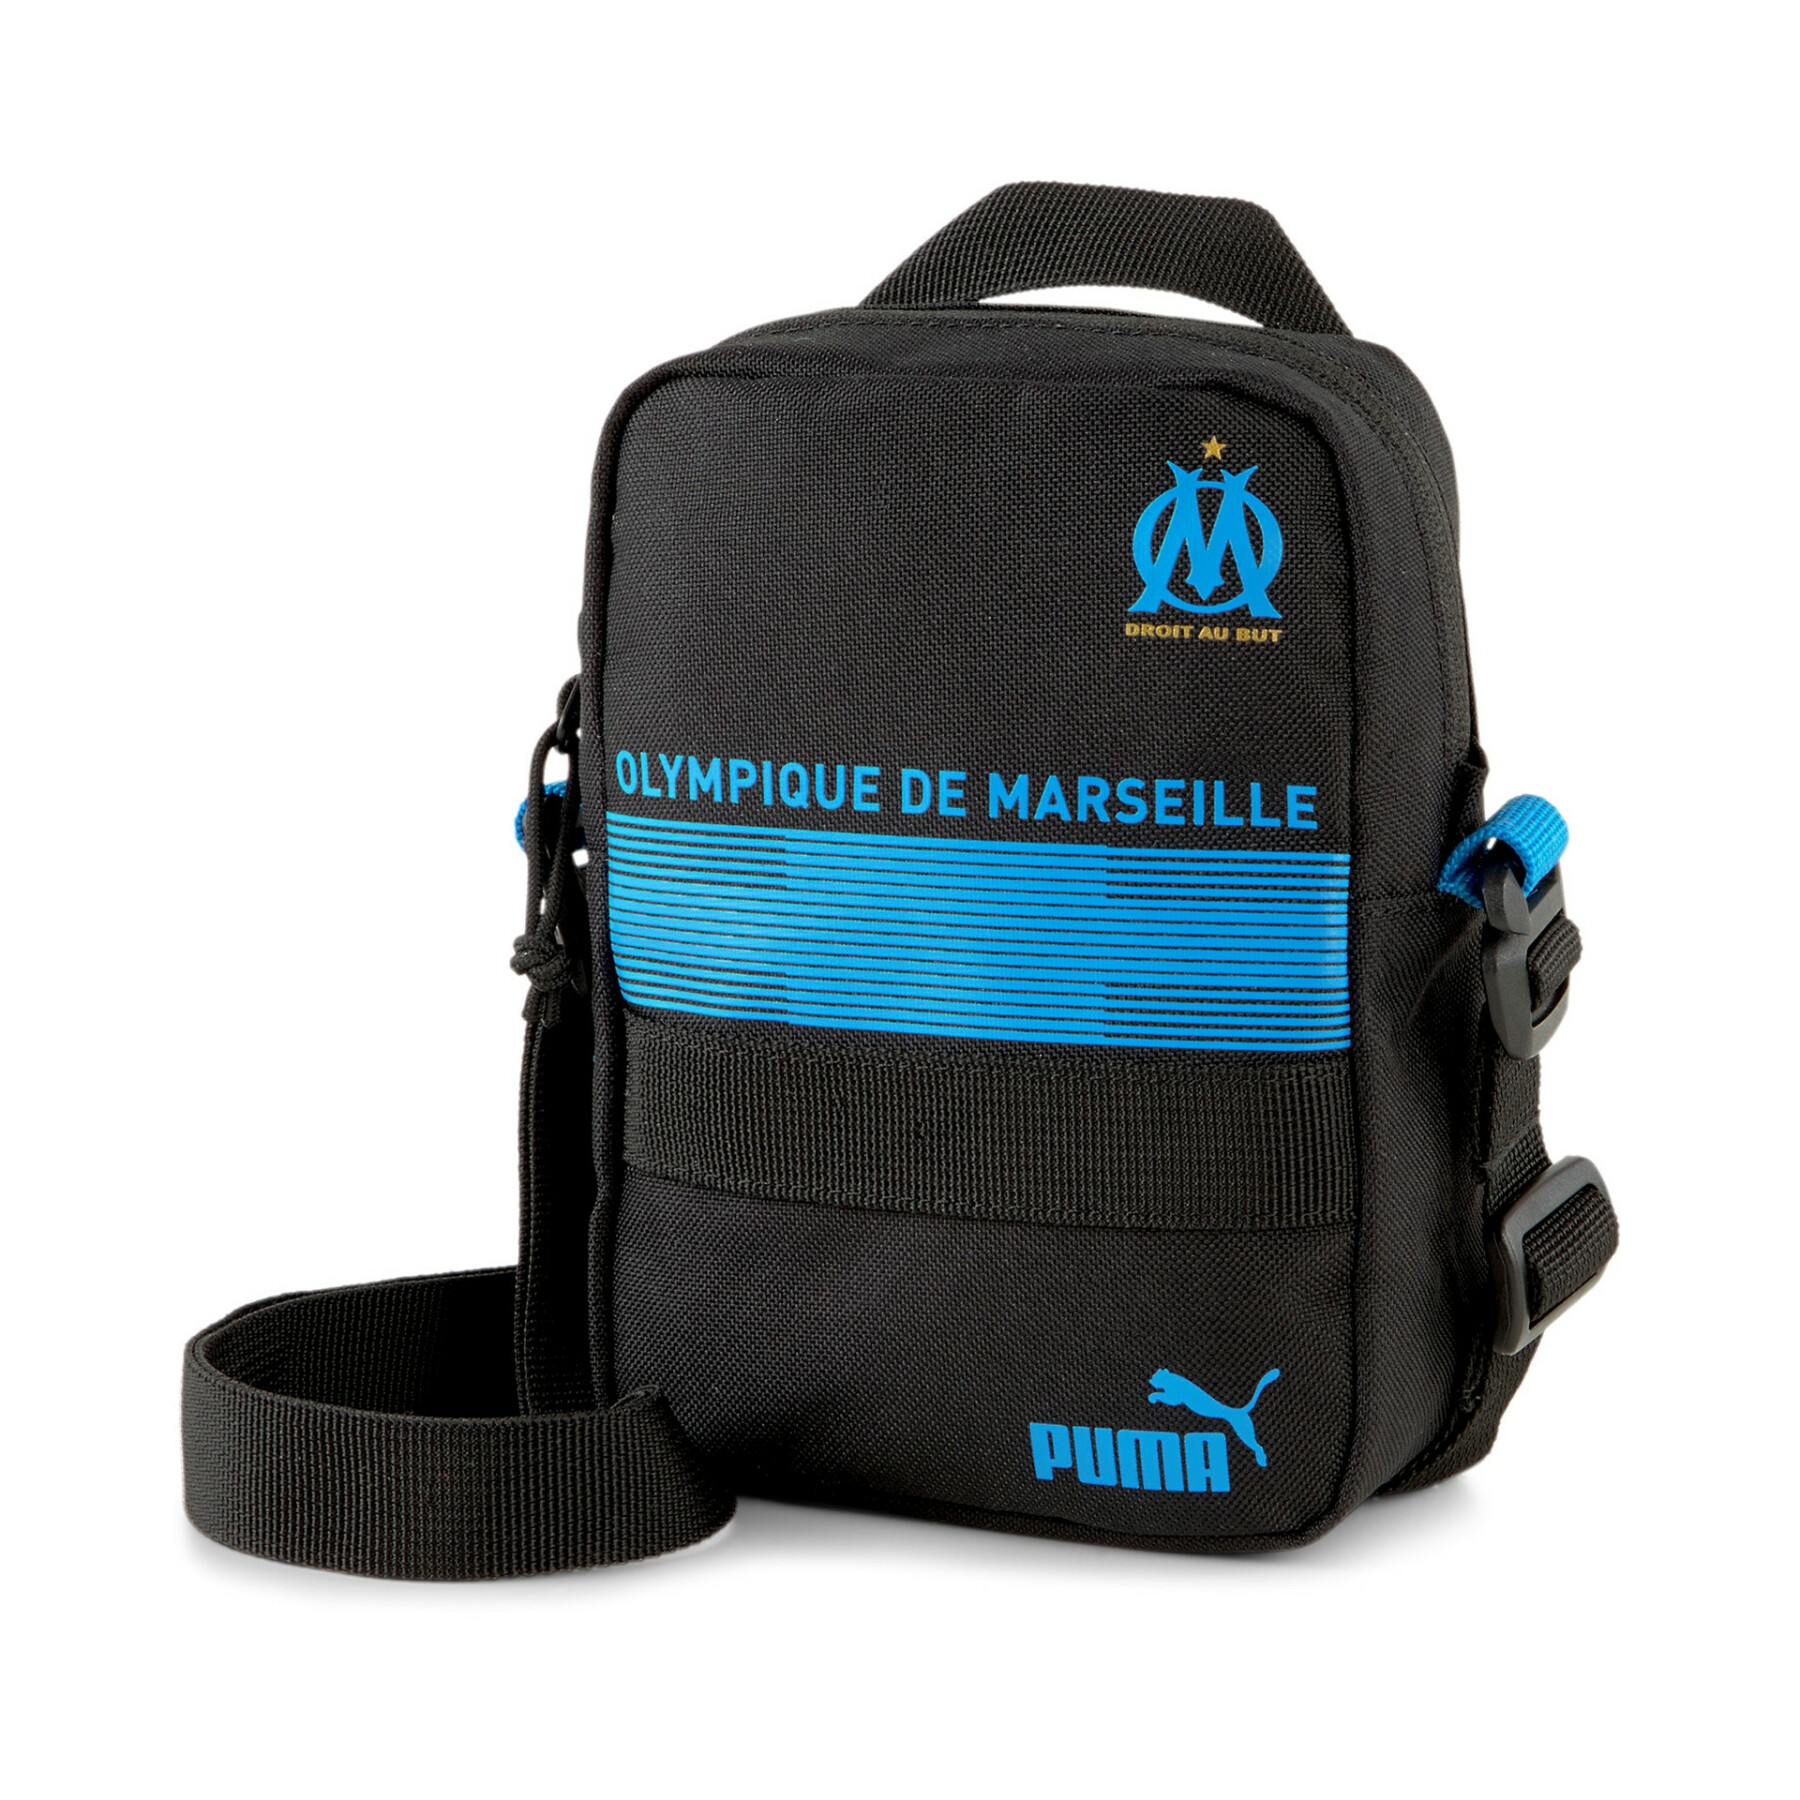 Tasche Olympique de Marseille ftblNXT Portable